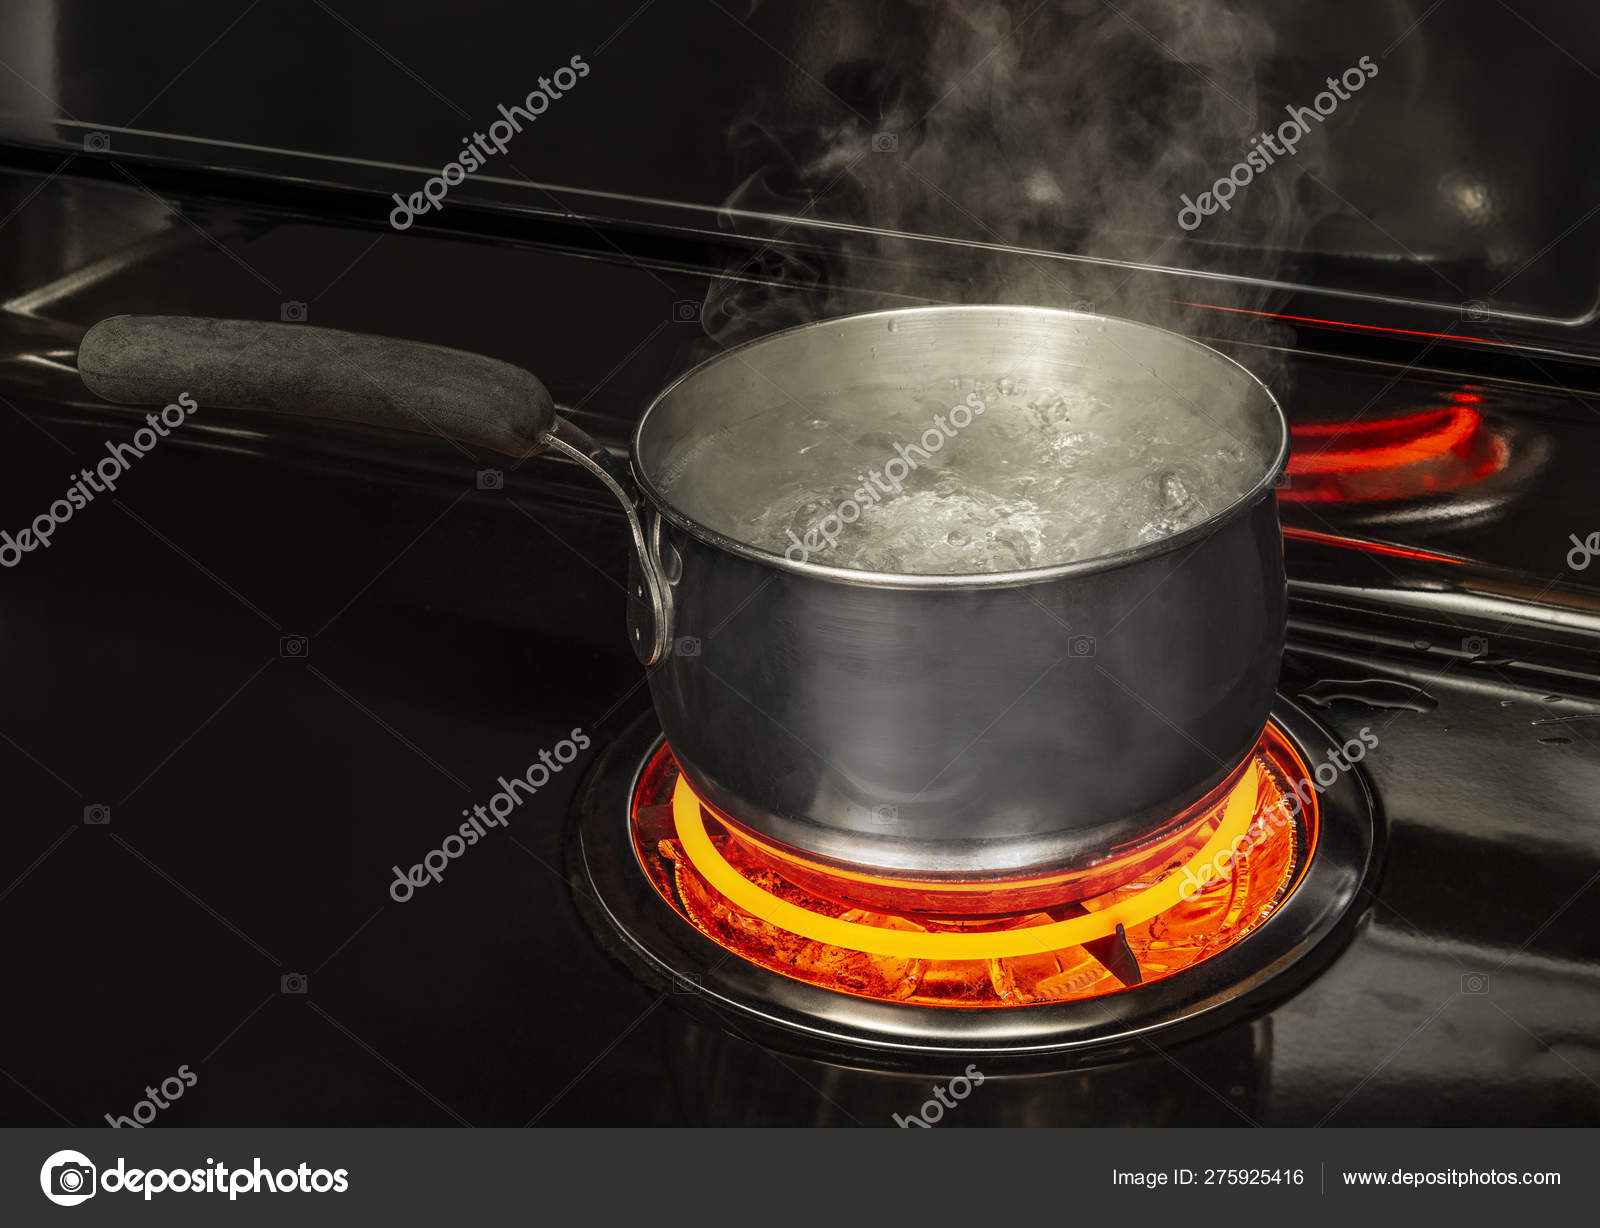 https://st4.depositphotos.com/1911991/27592/i/1600/depositphotos_275925416-stock-photo-boiling-pot-of-water-on.jpg